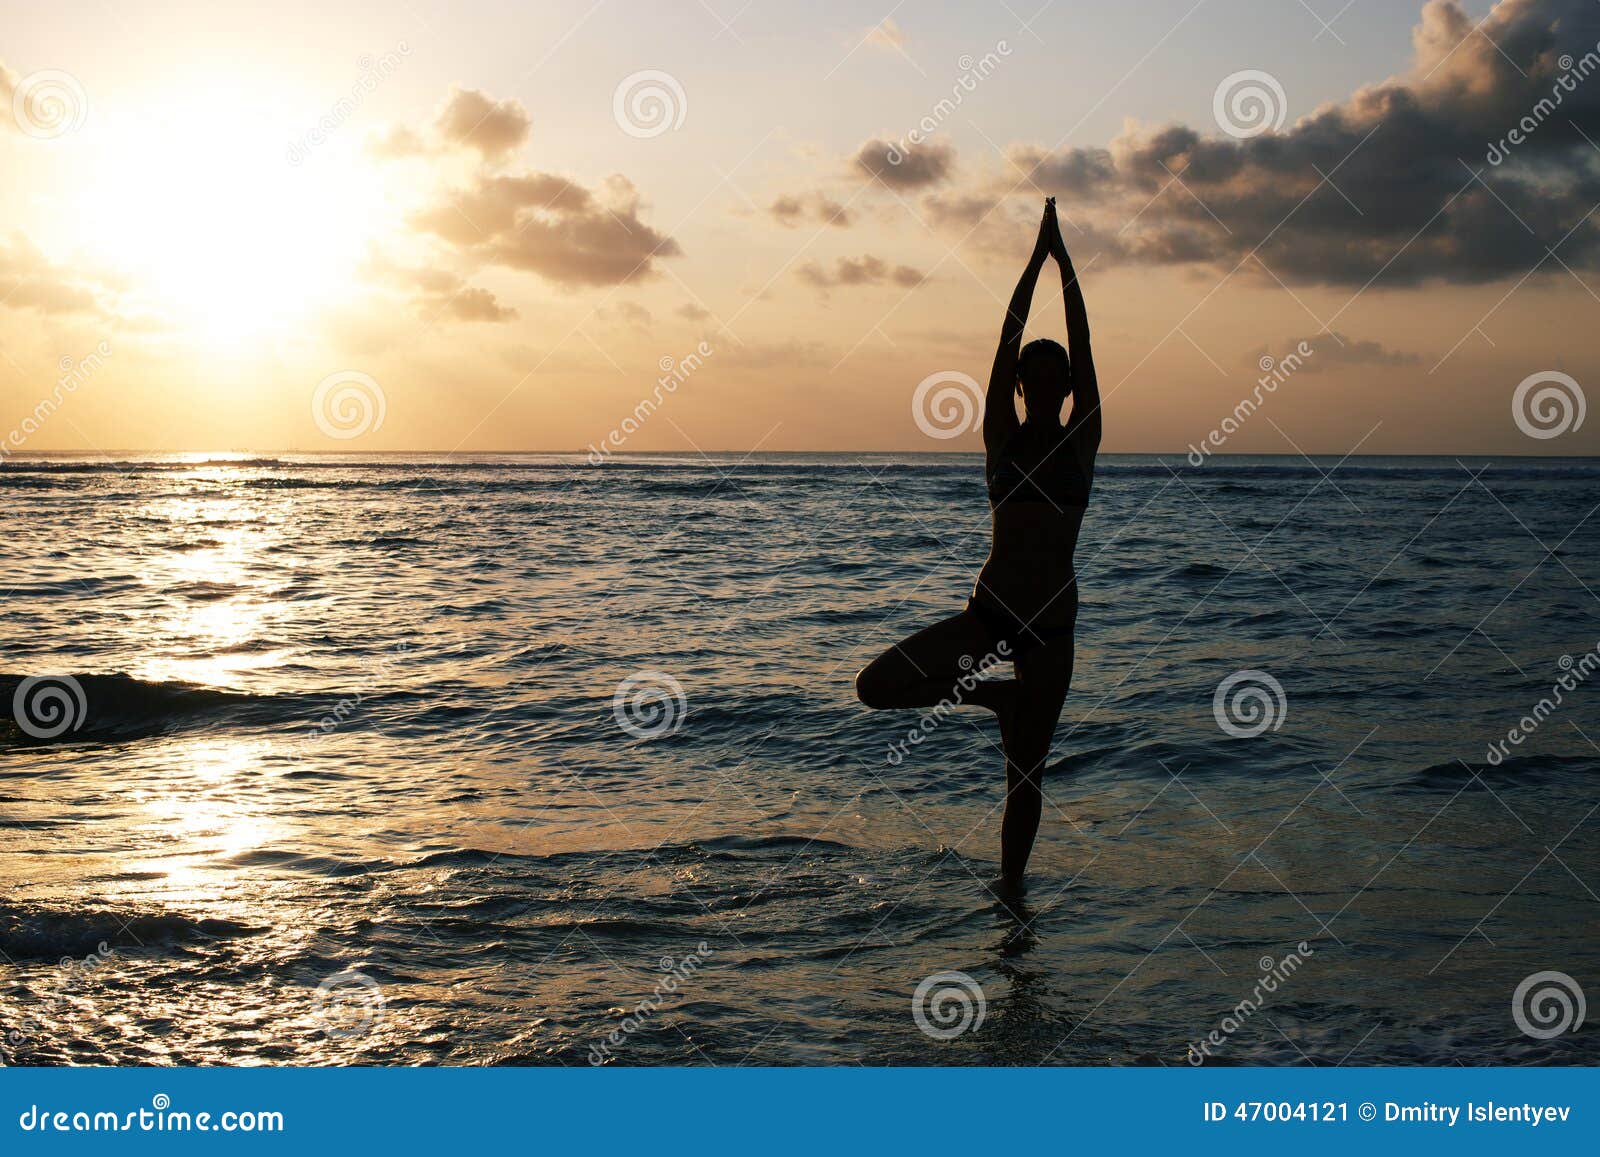 Vrikshasana Tree Pose from Yoga Stock Image - Image of class, beach ...